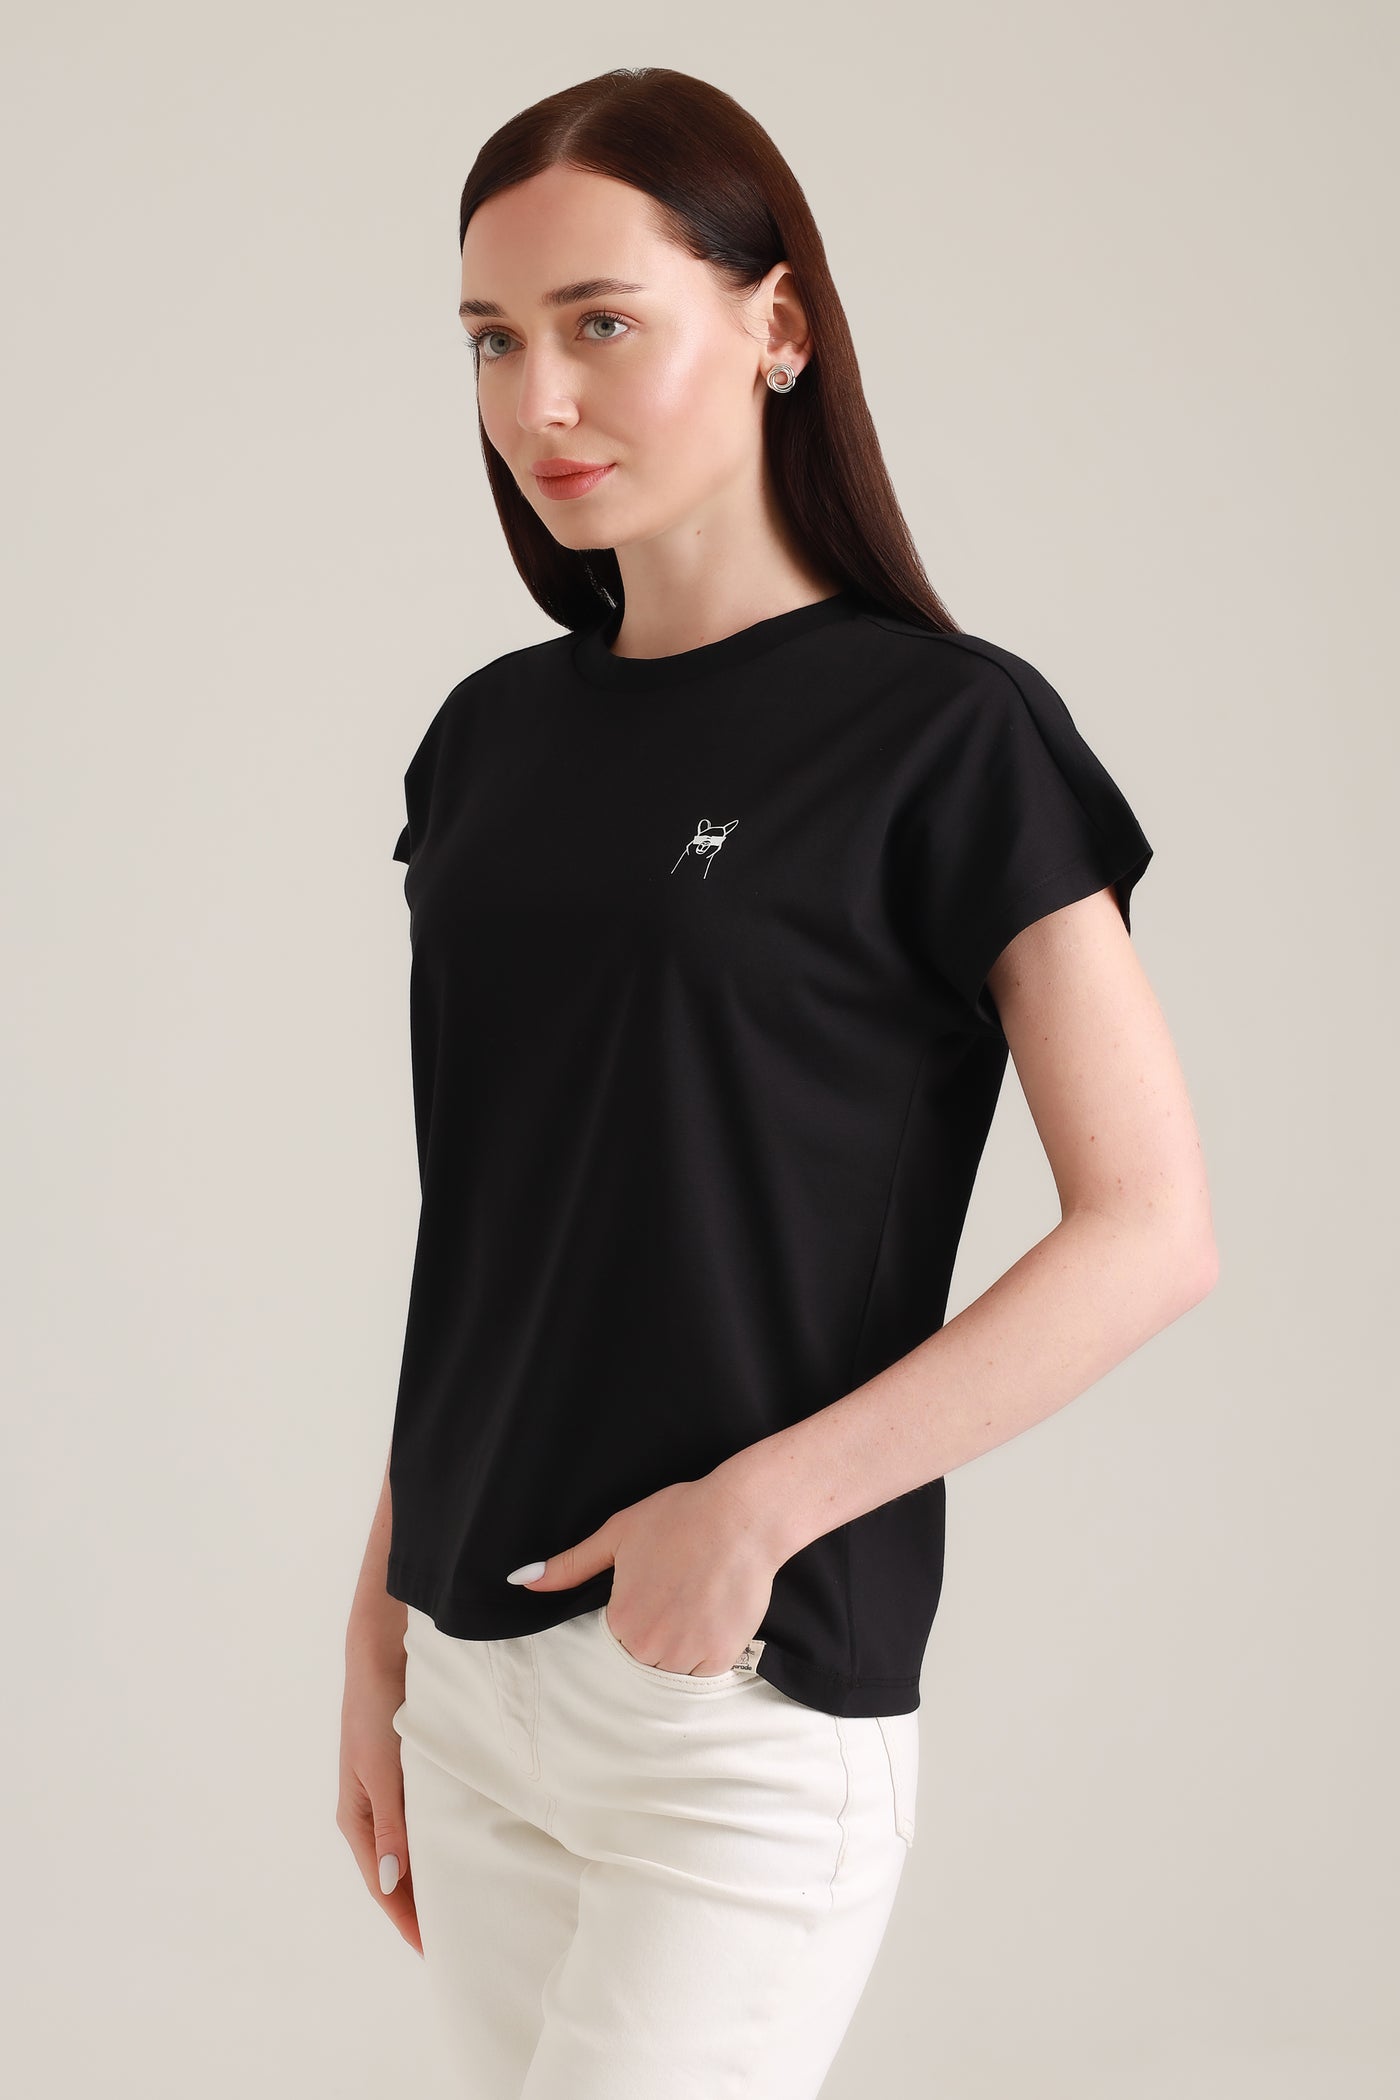 T-Shirt Women Short Sleeves Cool Paka Black